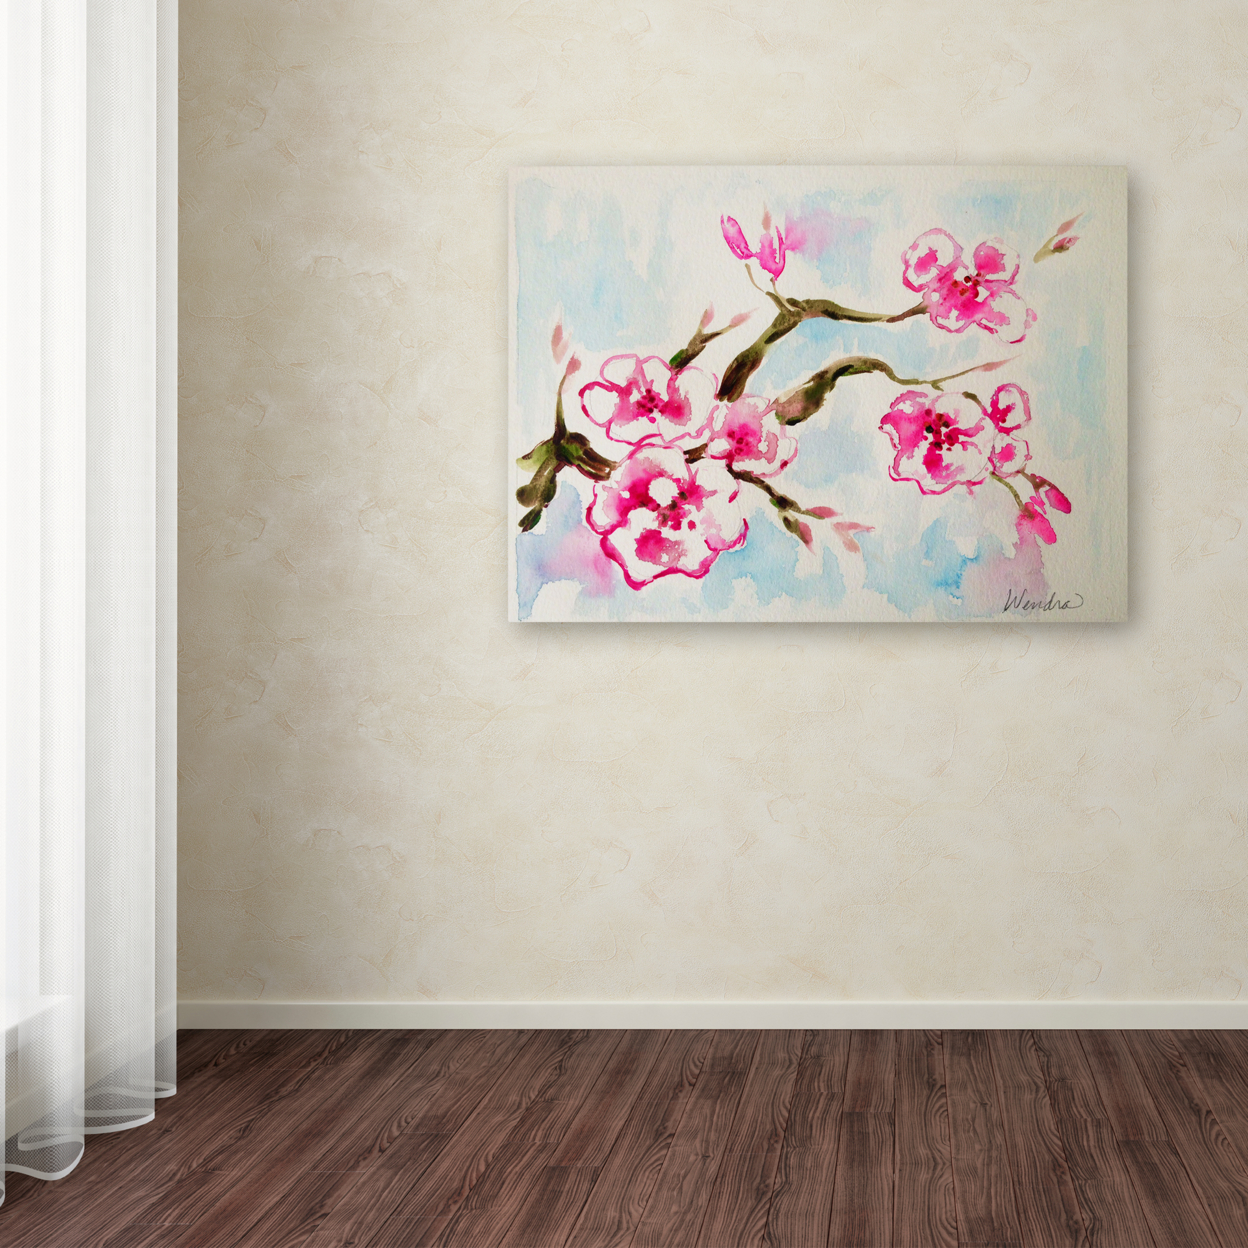 Wendra 'Cherry Blossom' Canvas Art 18 X 24